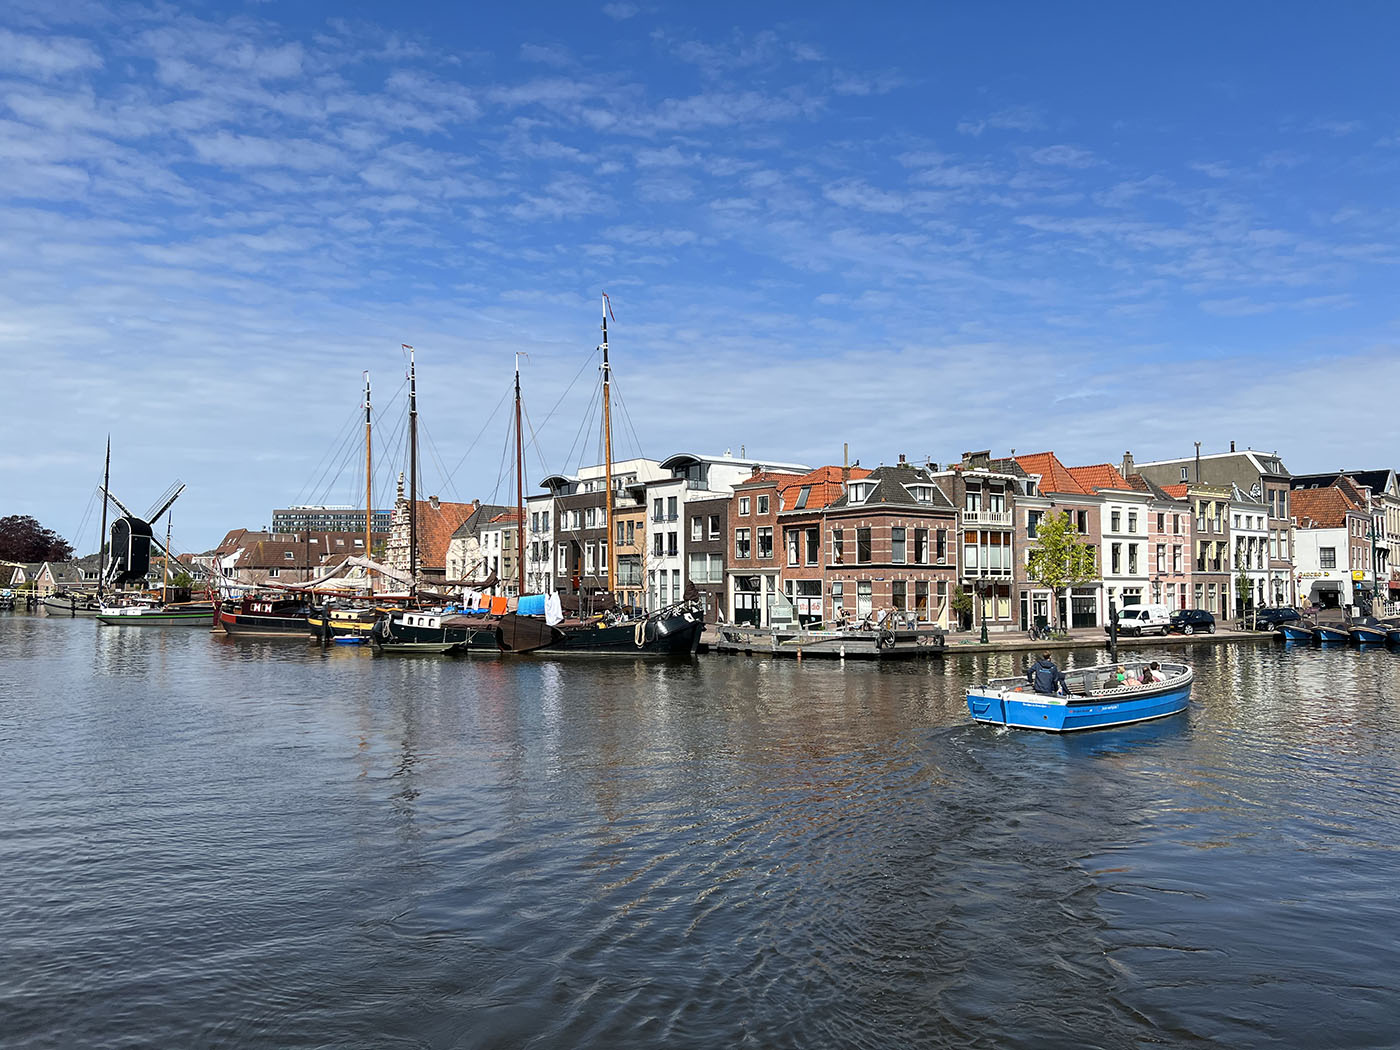 Canal in Leiden. The Netherlands. Credit: Carolina Valenzuela